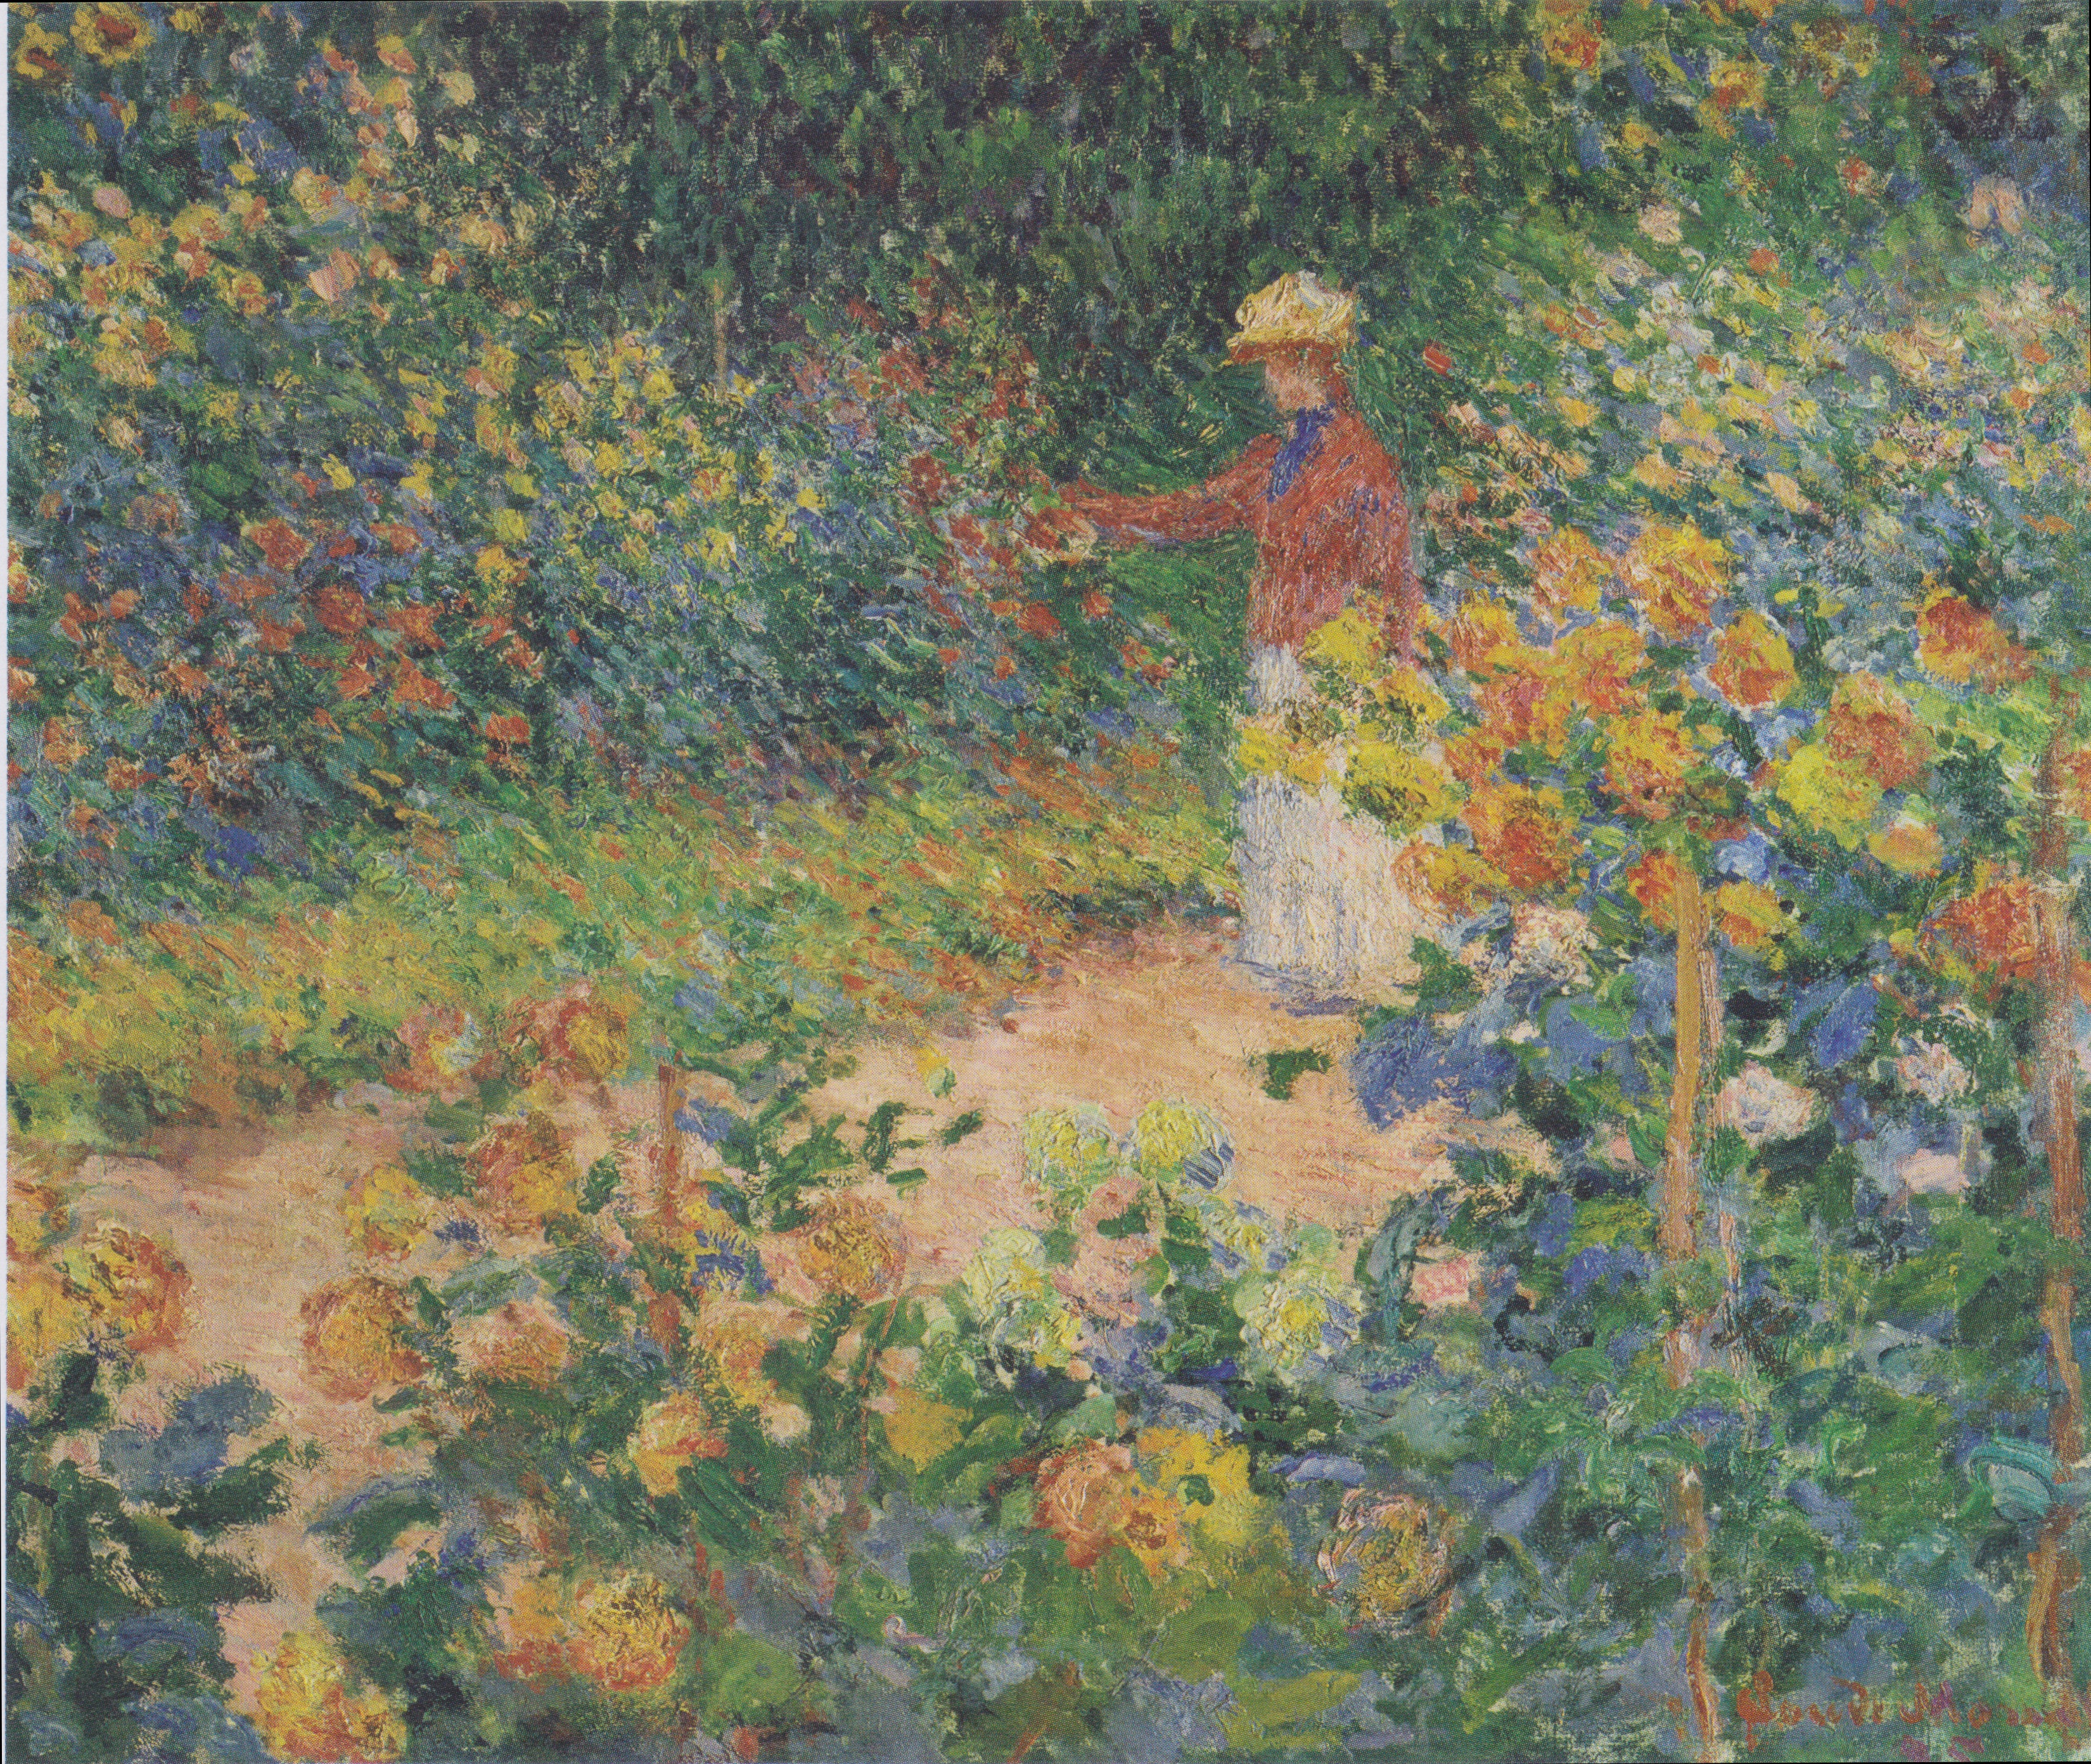 Painting Claude Monet   Im garten wallpapers and images   wallpapers